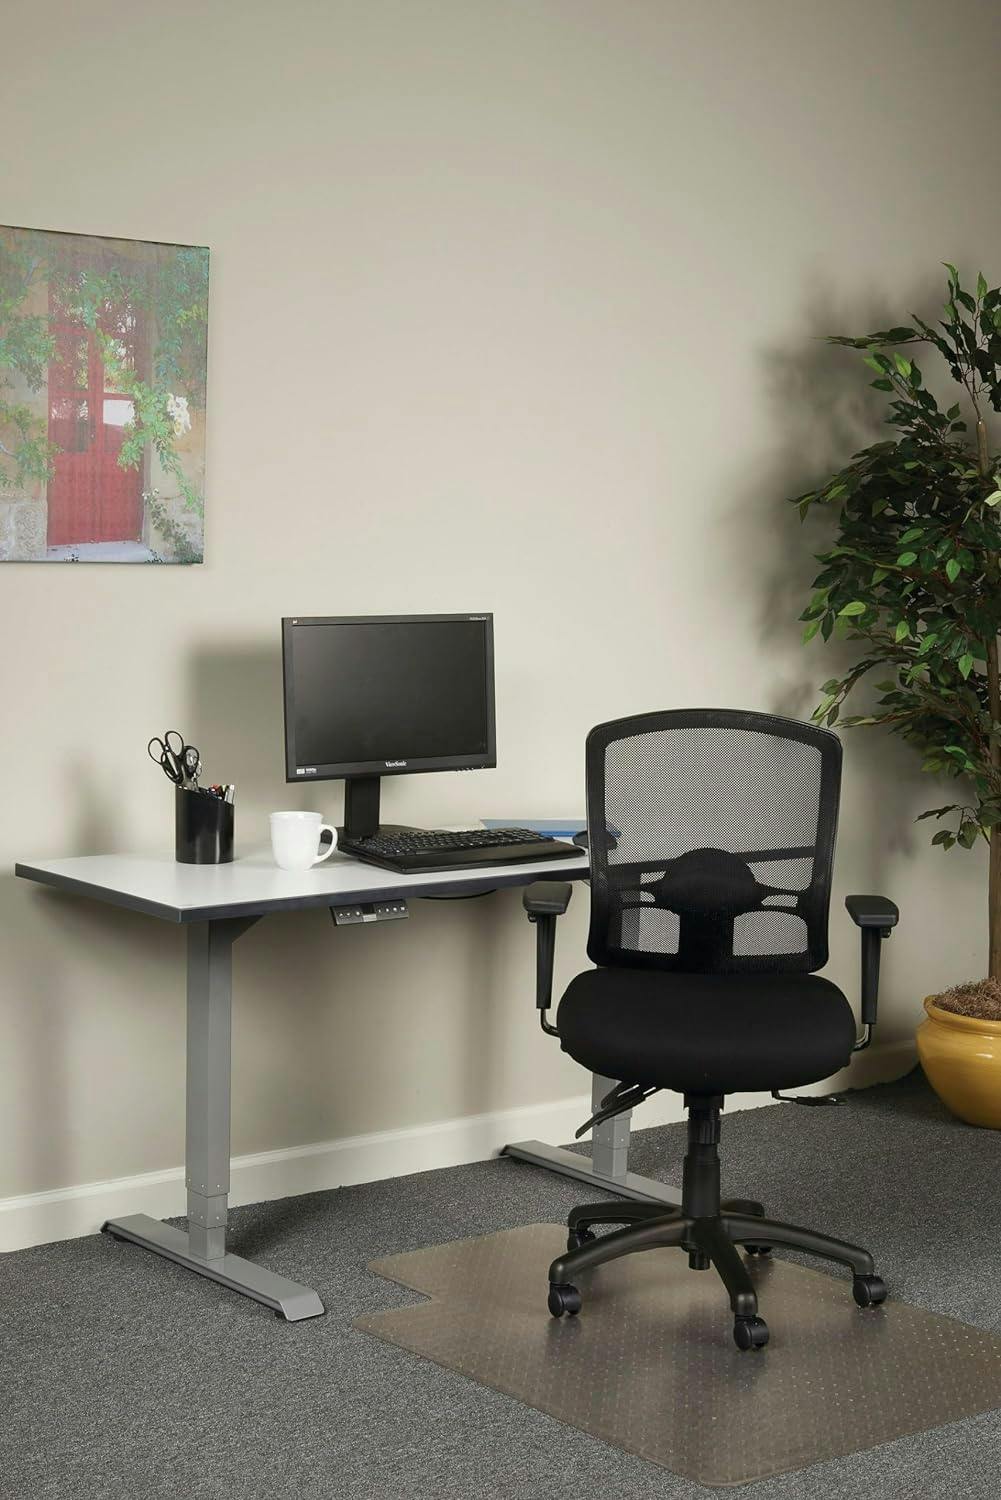 Adjustable Ergonomic Mesh Office Chair with Tilt and Swivel, Black